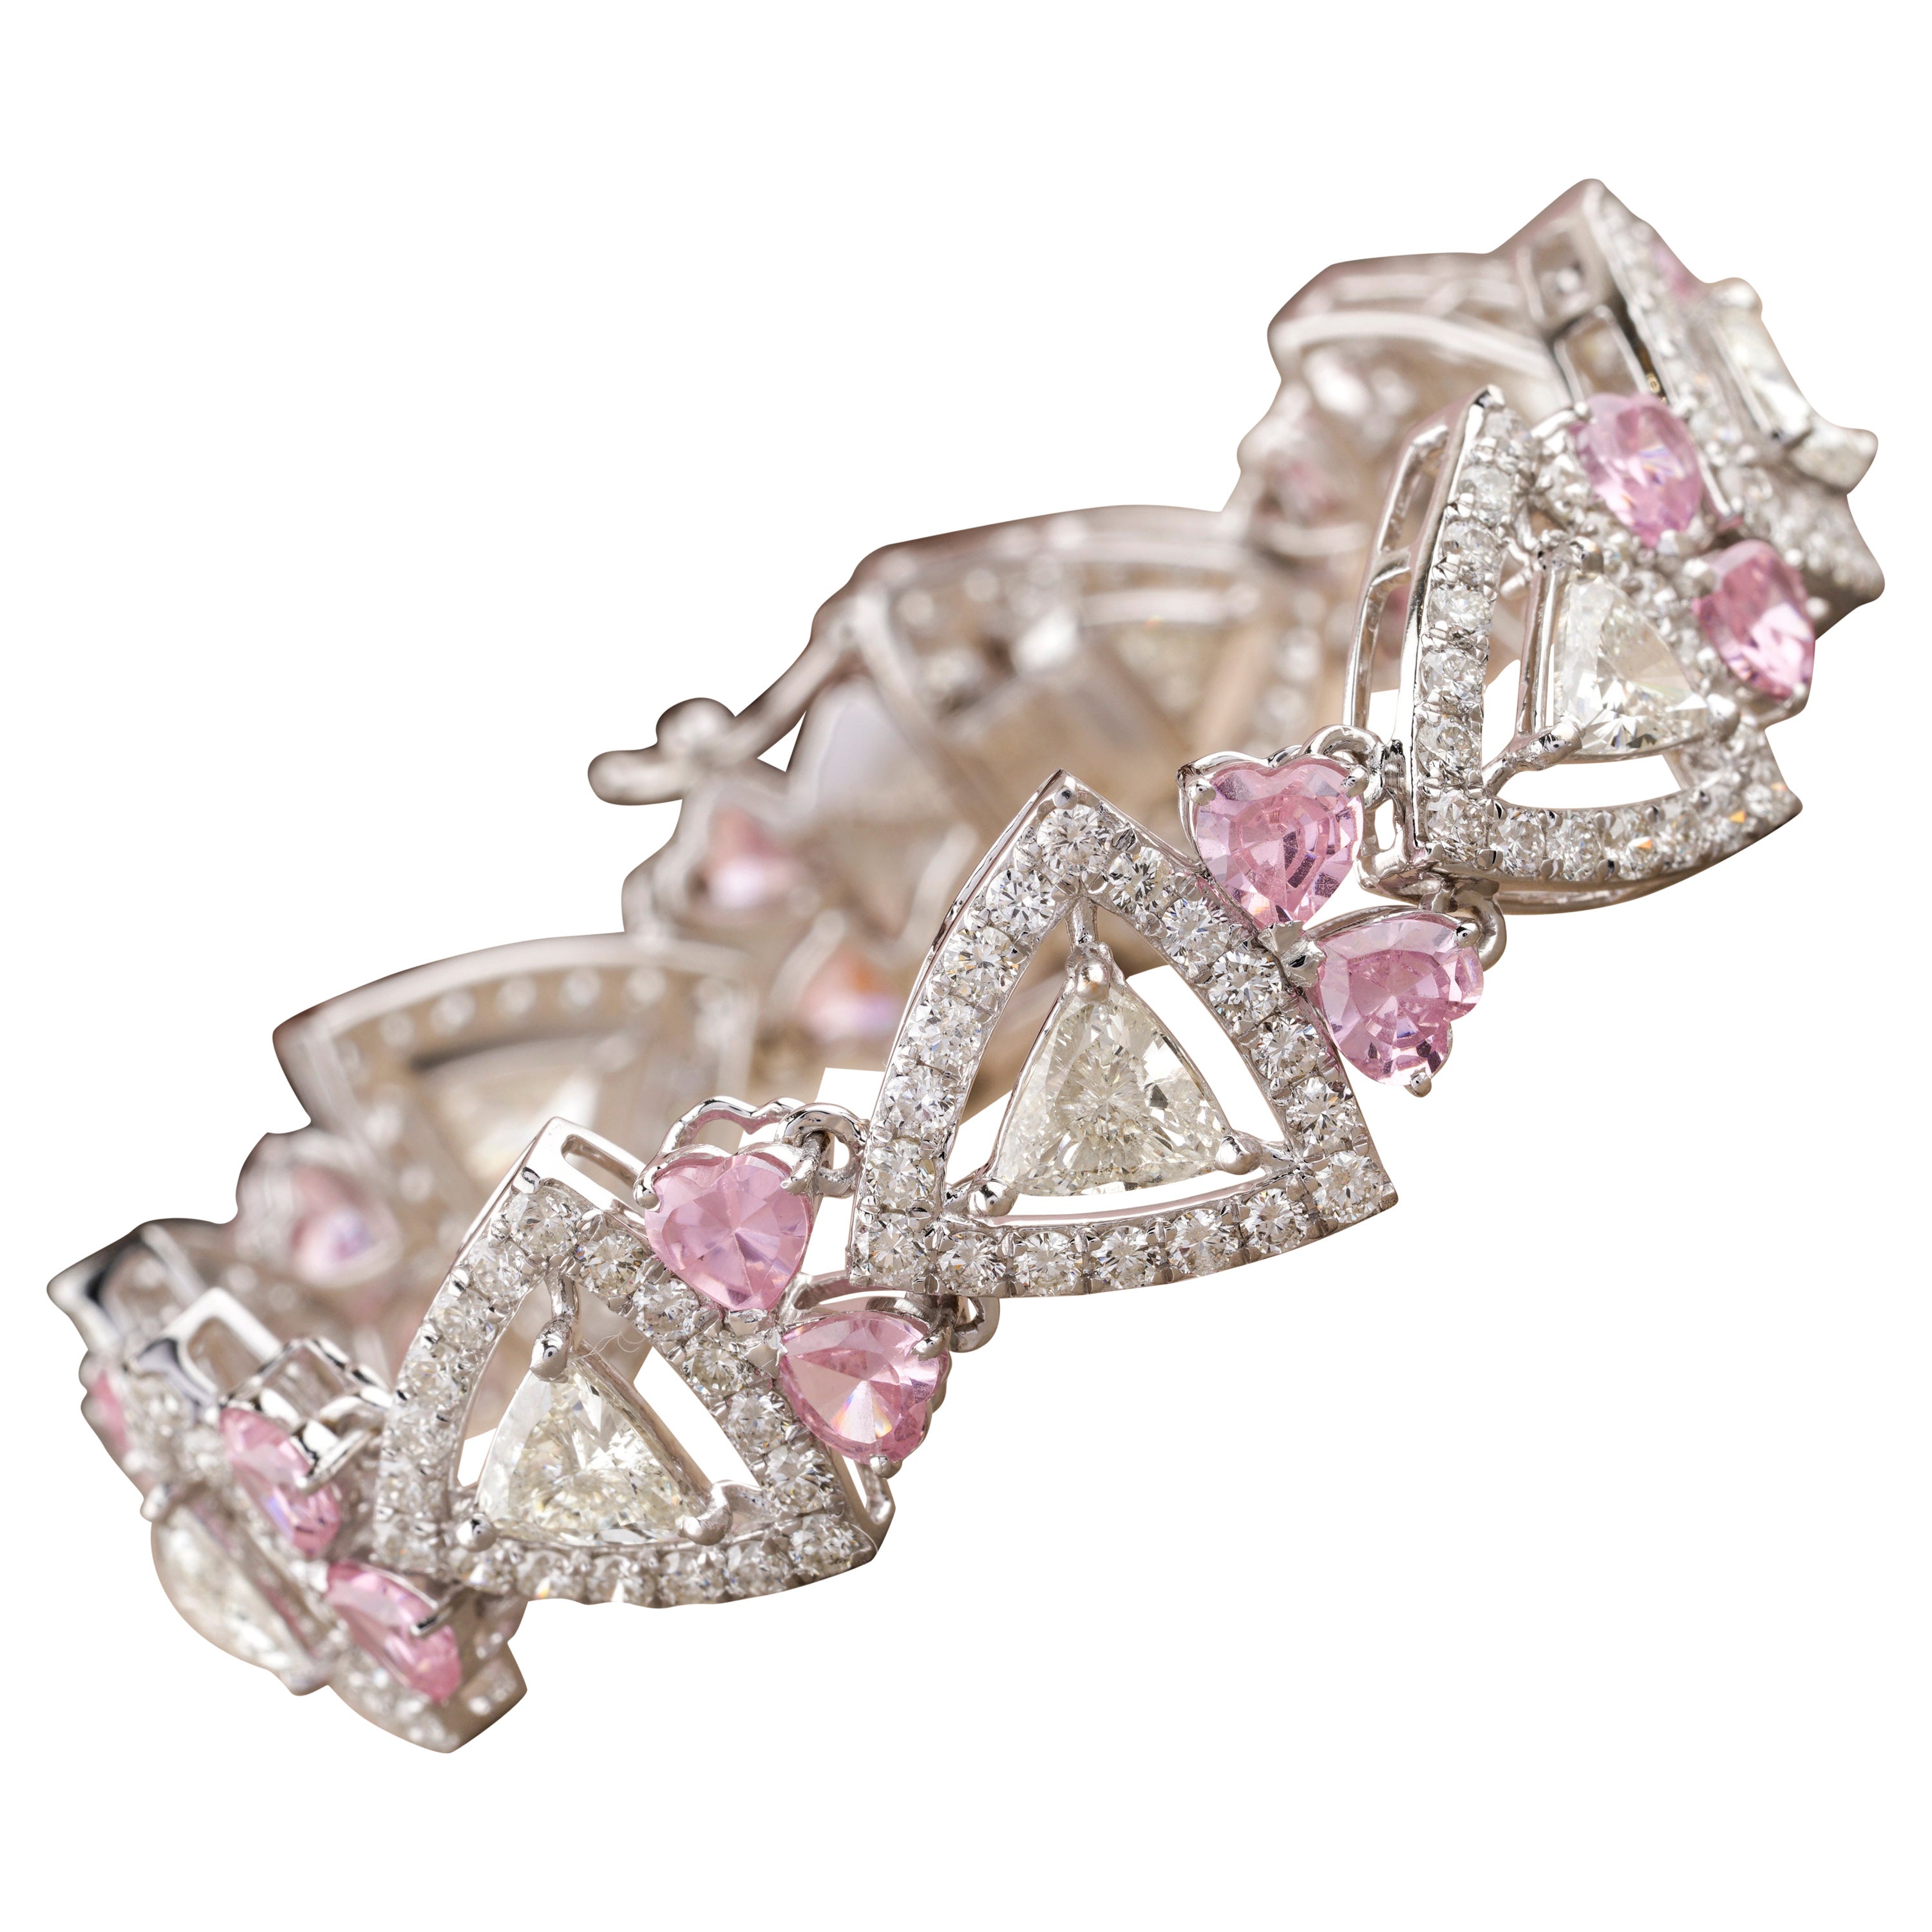 Pink Tourmaline with Haloed Trillion Diamonds Bracelet in 18K Solid Gold